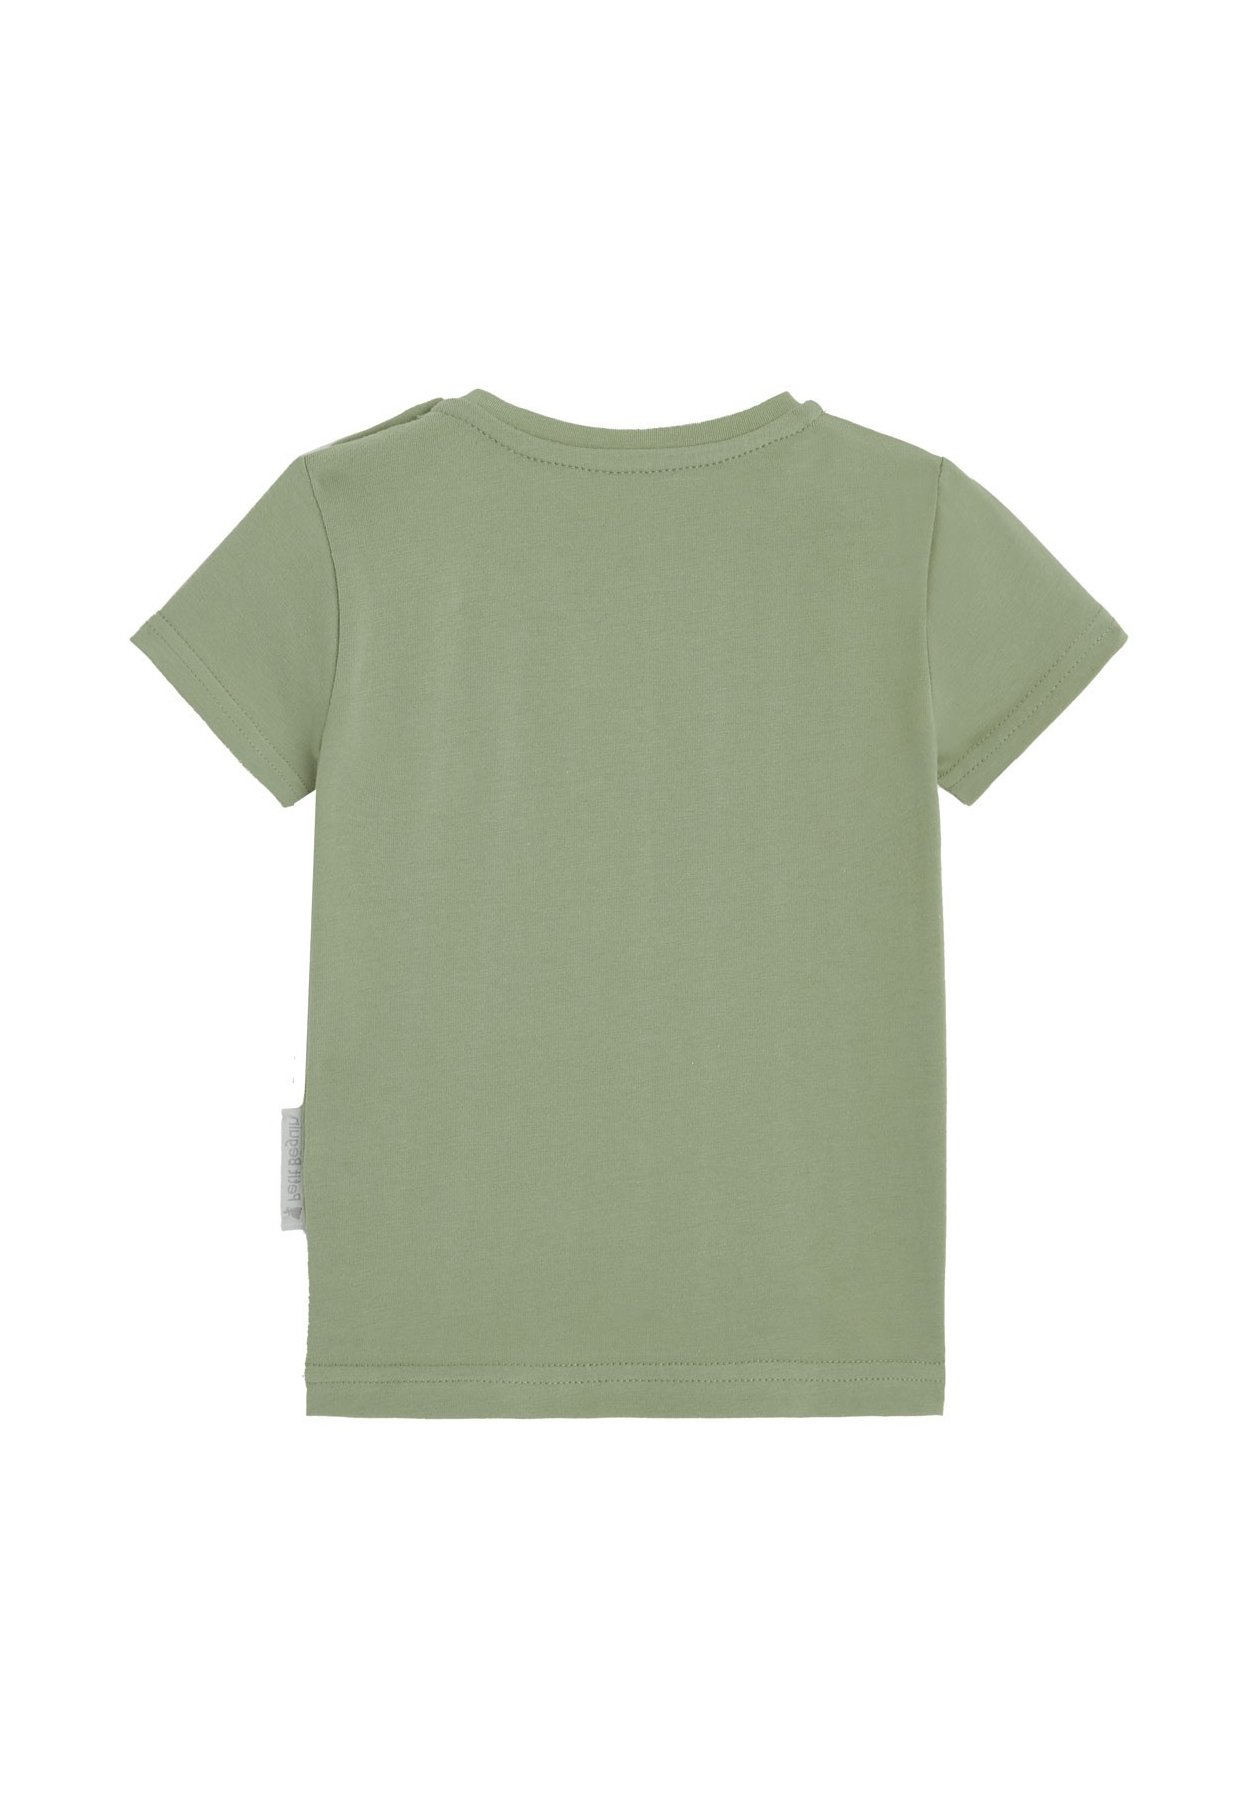 T-shirt manches courtes mixte vert dos